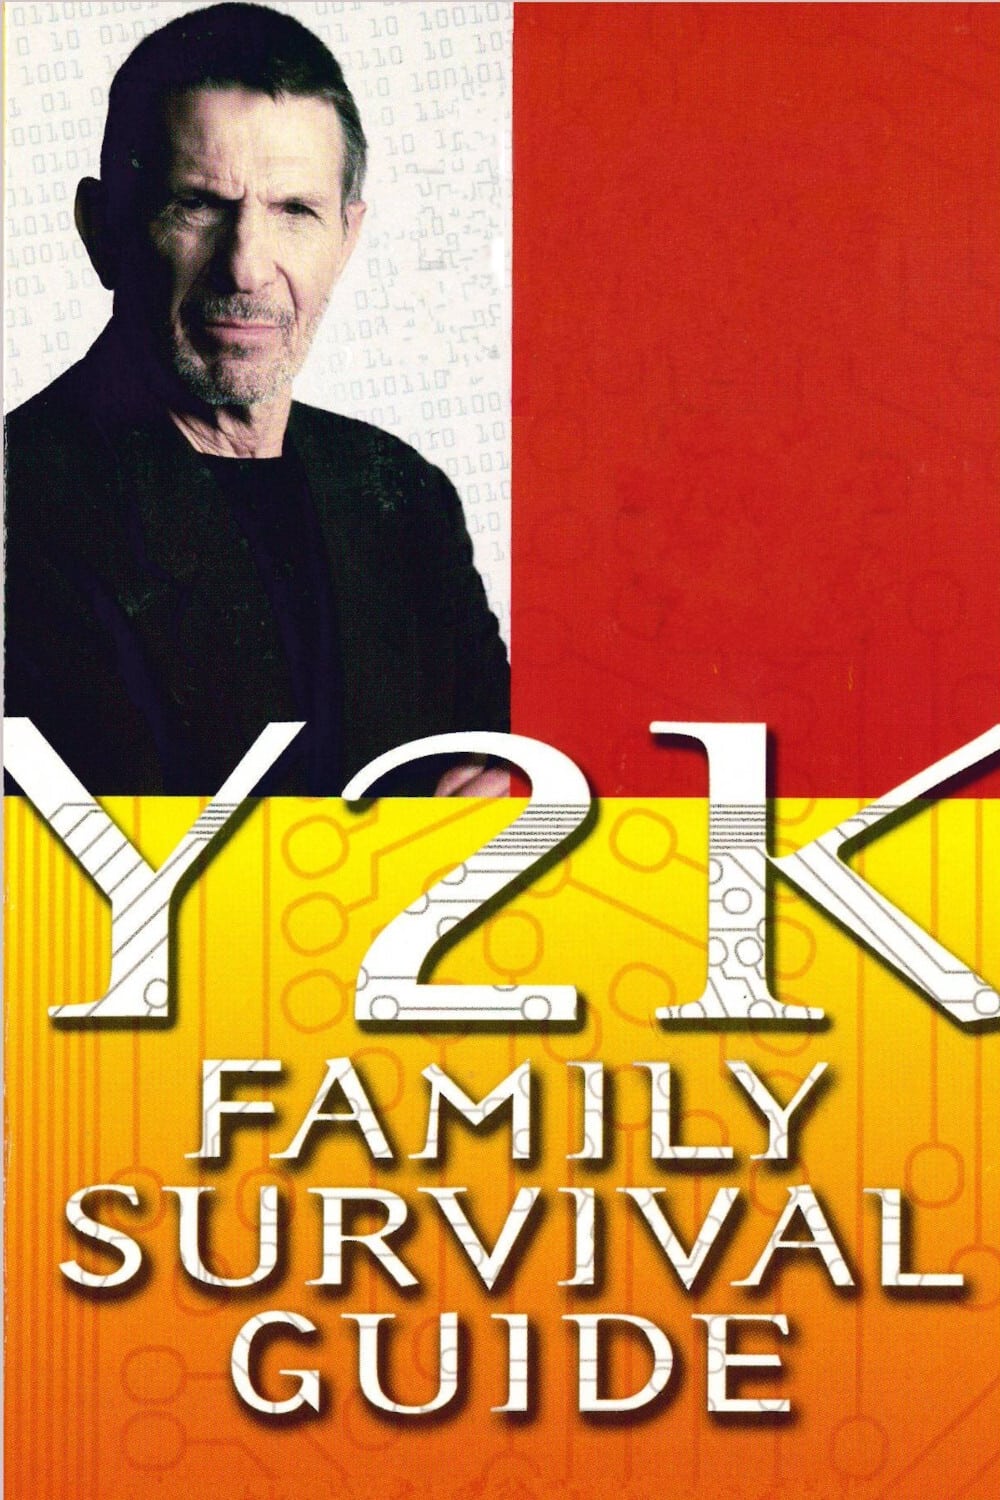 Y2K Family Survival Guide (1999)